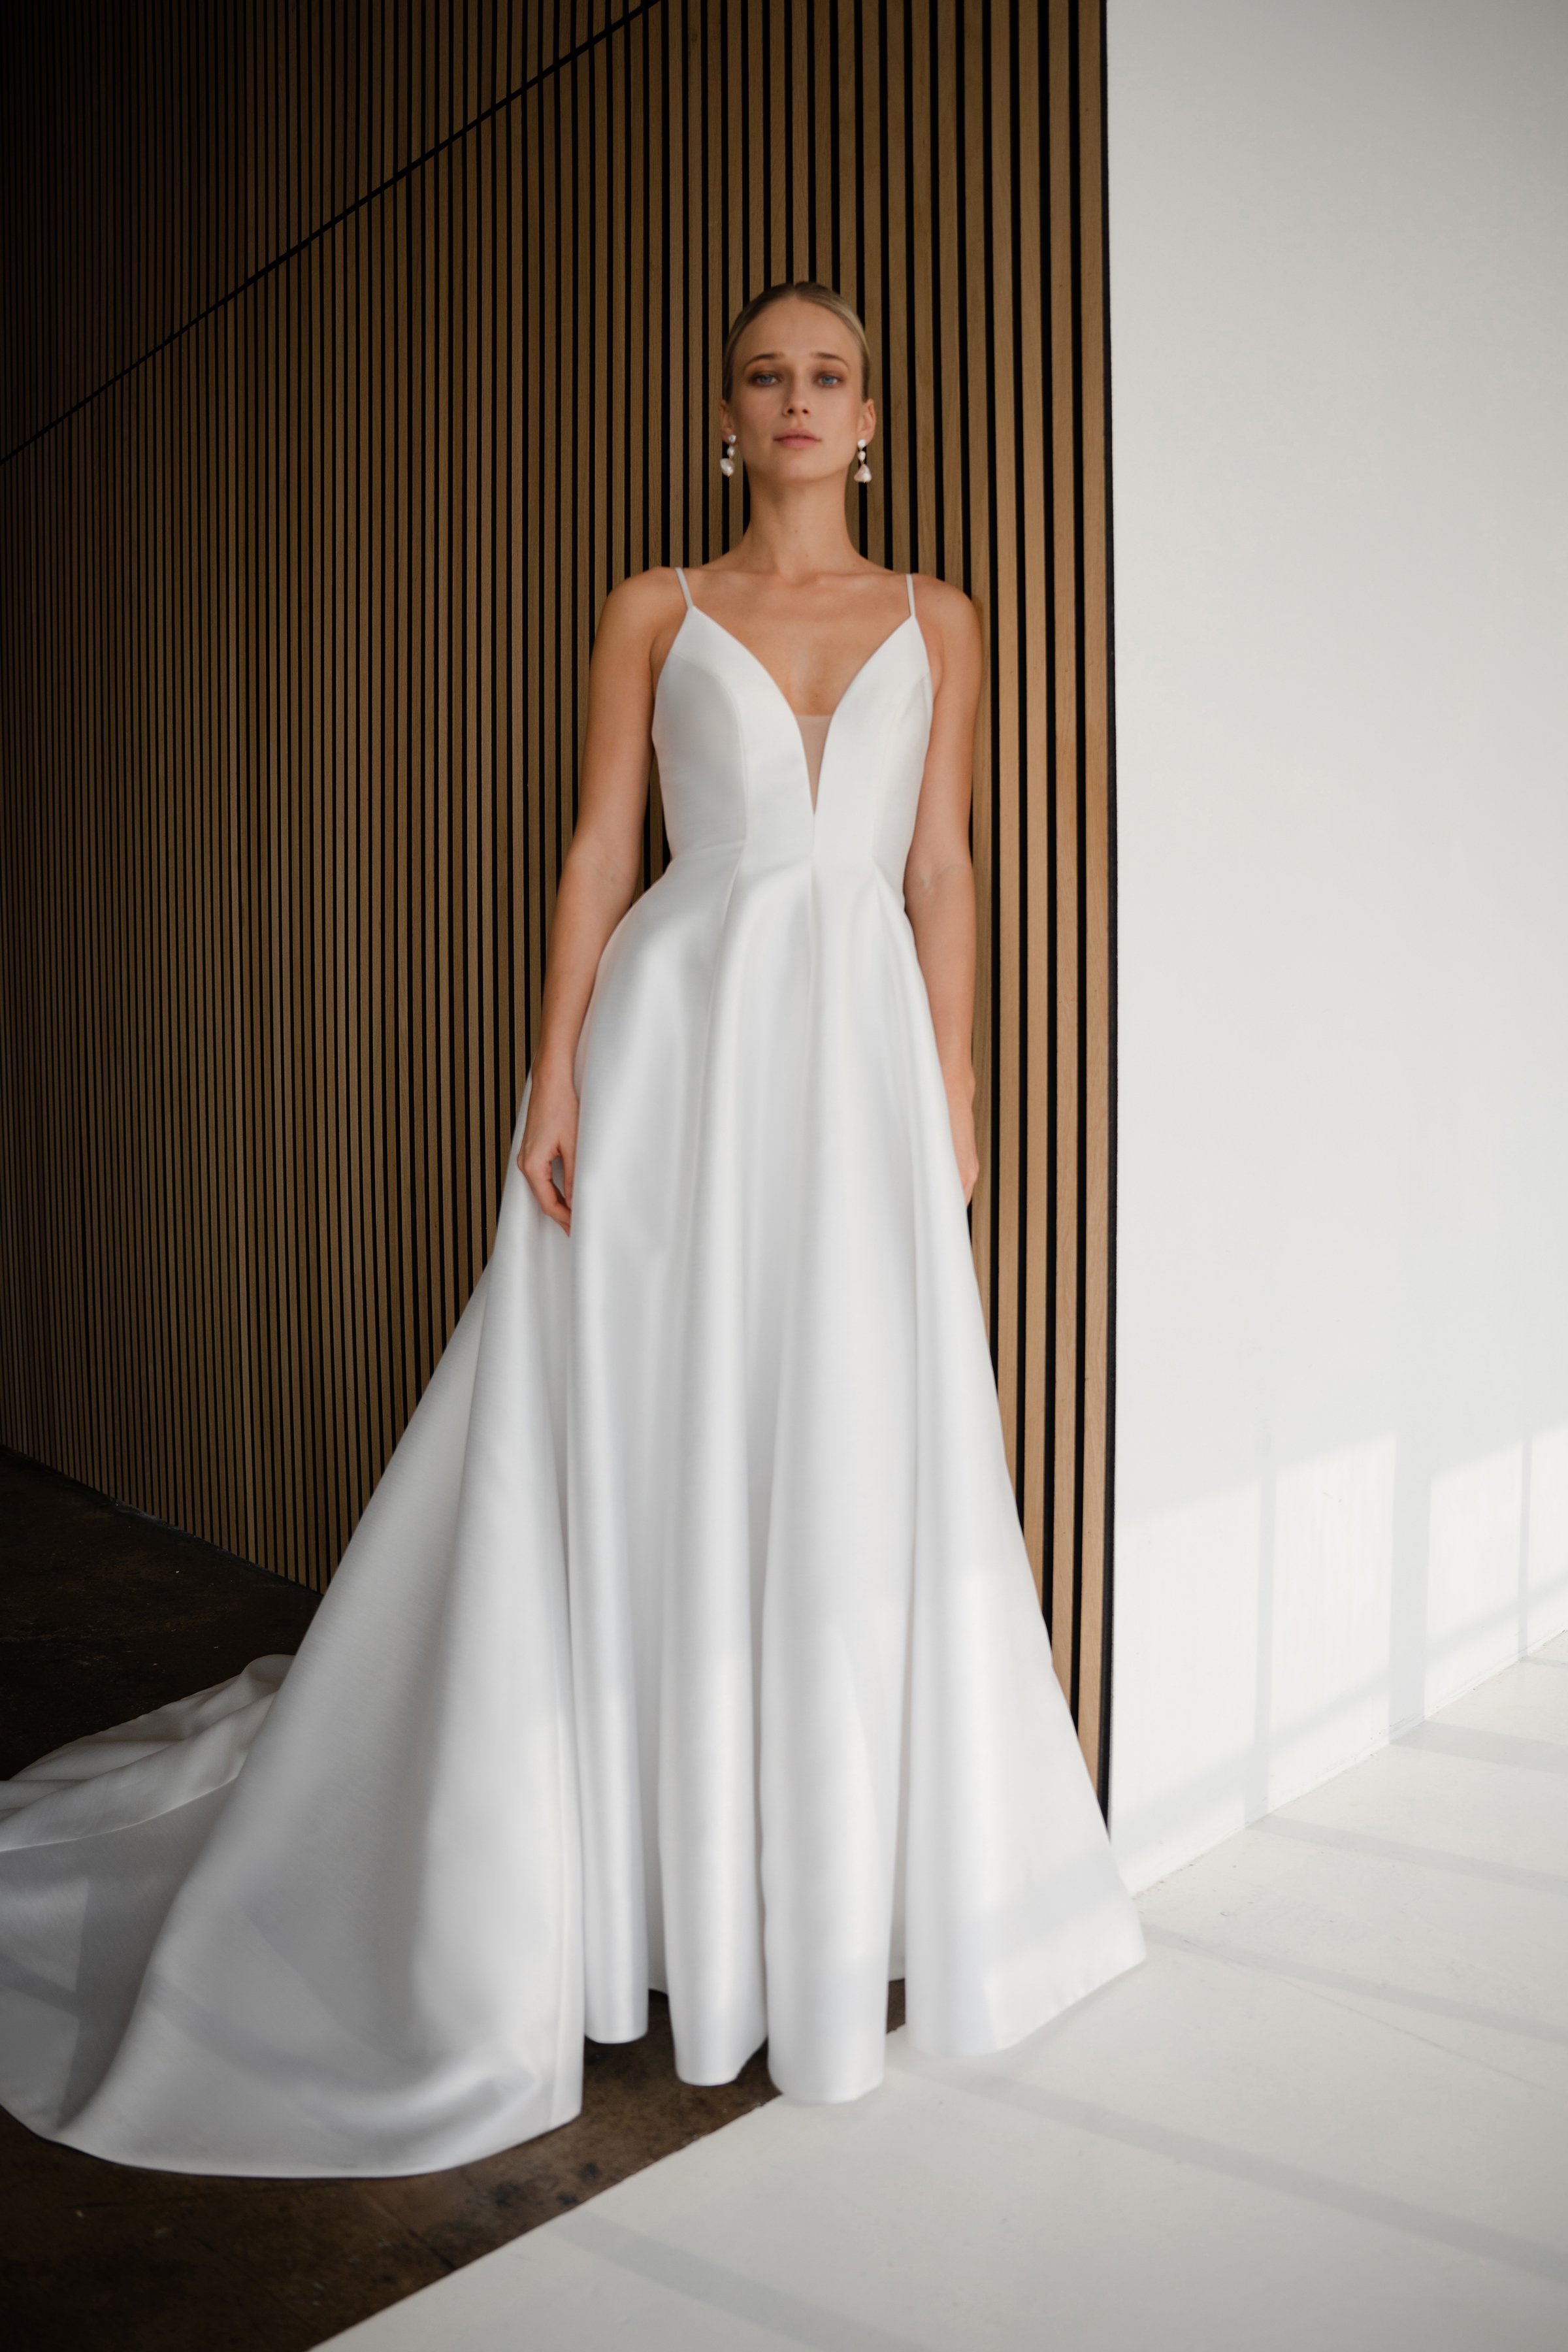 blanc-de-blanc-bridal-boutique-pittsburgh-cleveland-dress-wedding-gown-jenny-yoo-tamson-front.jpg